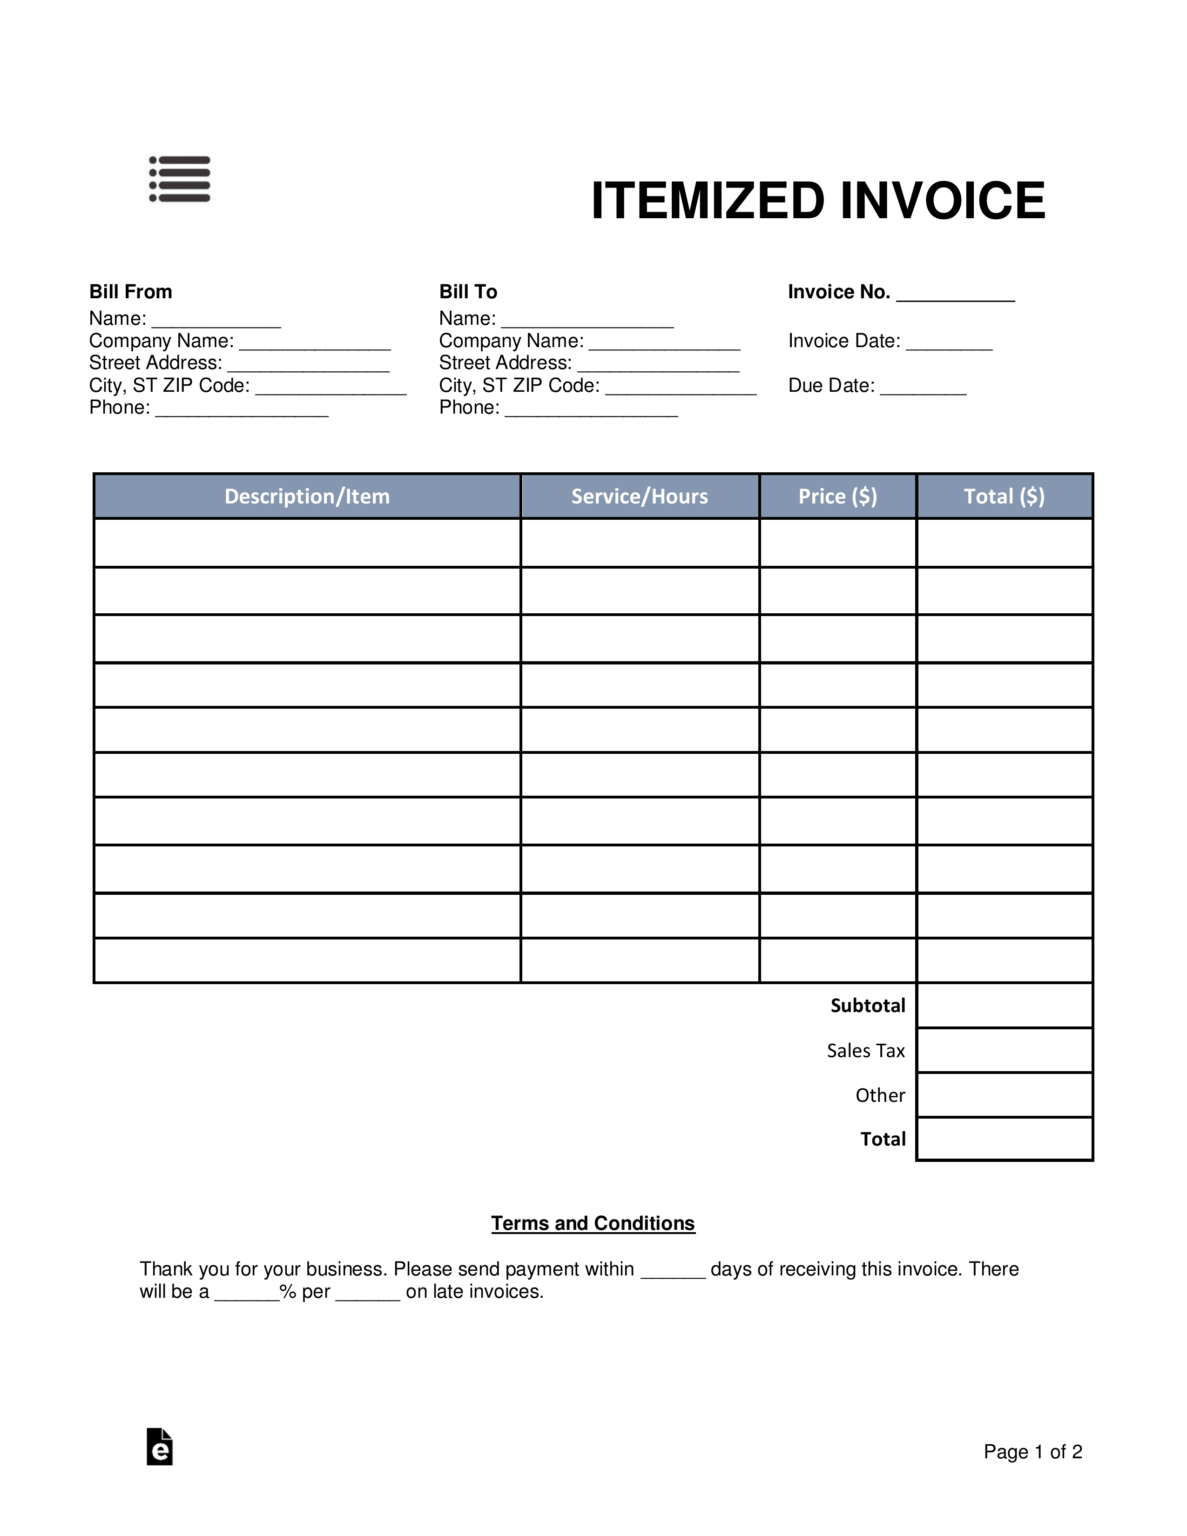 Itemized Bill Of Sale Firuse rsd7 Regarding Itemized Invoice Template